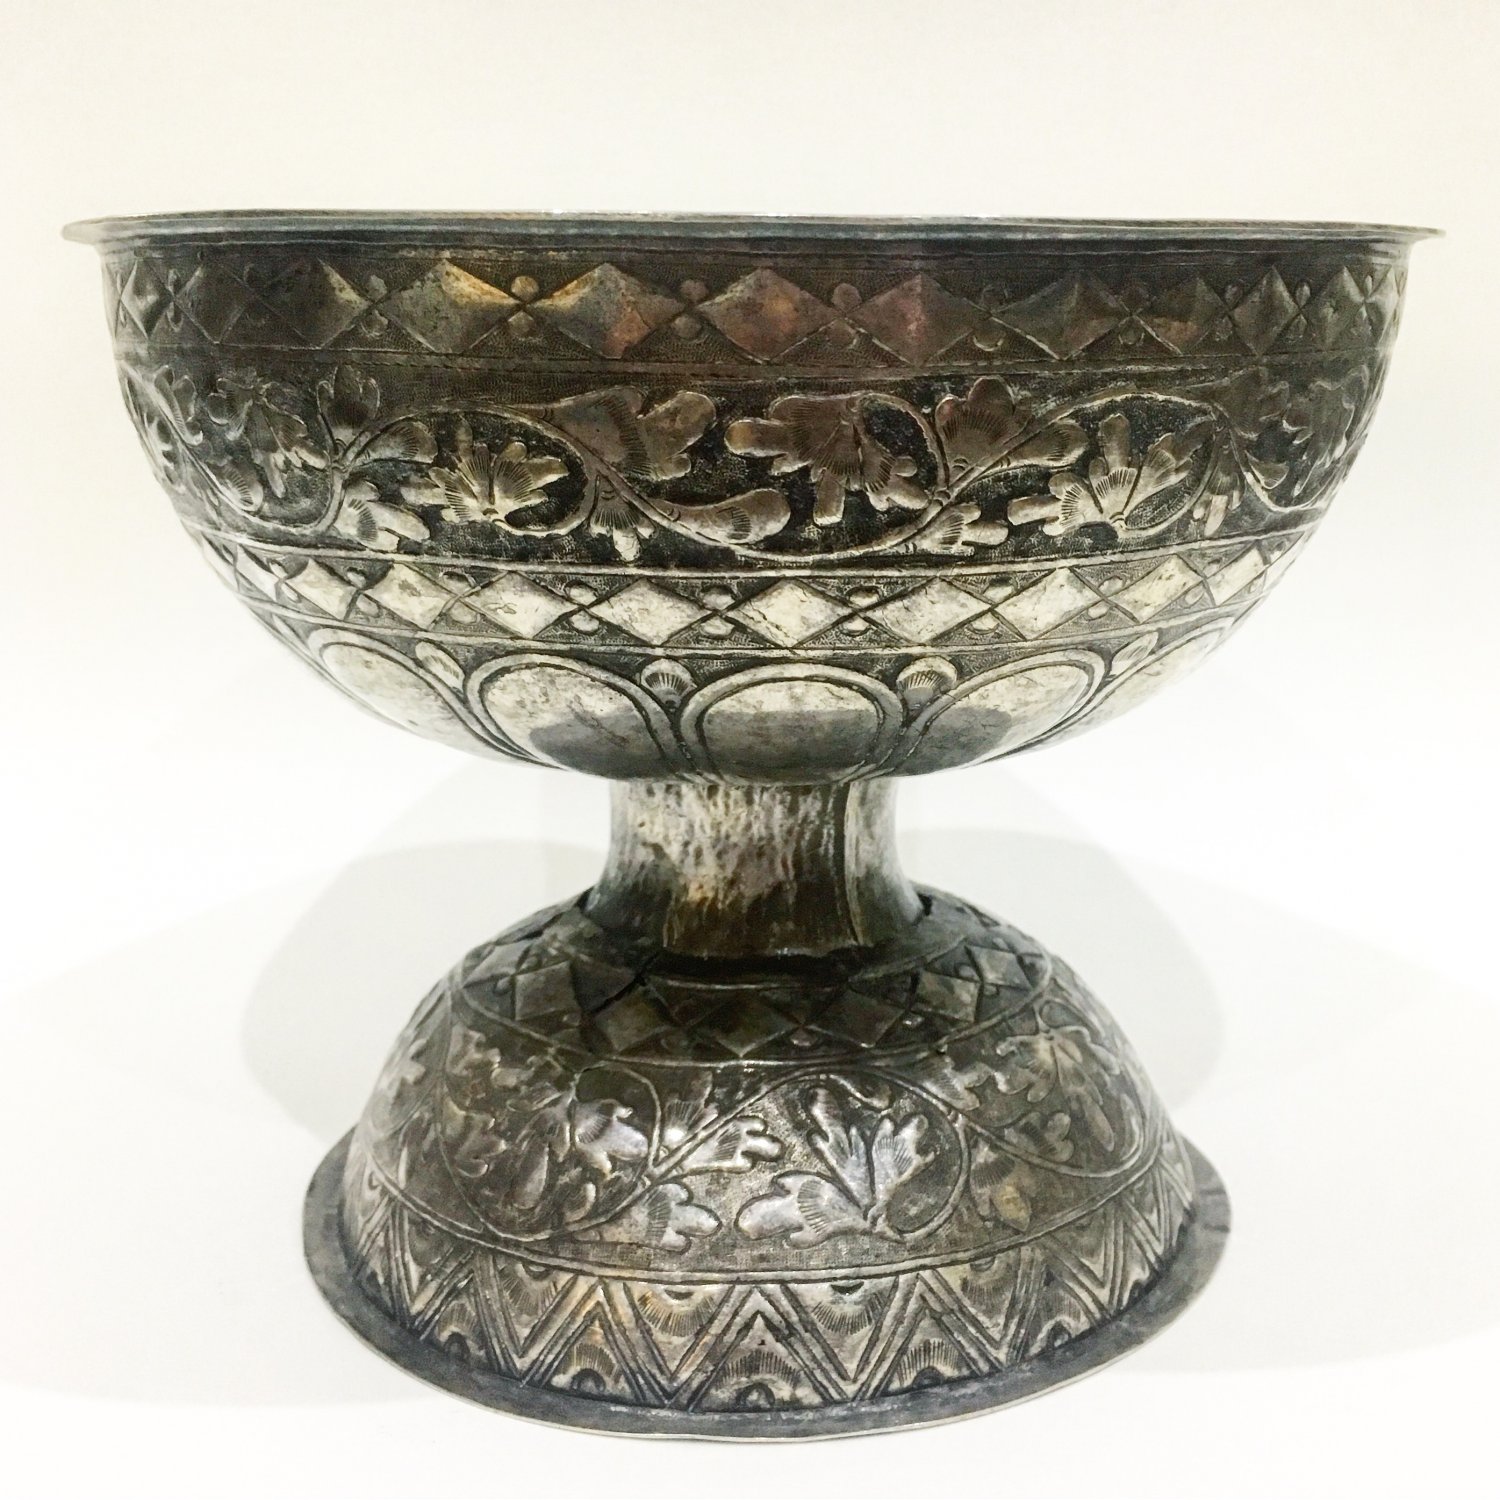 Silver offering bowl (Pahar).